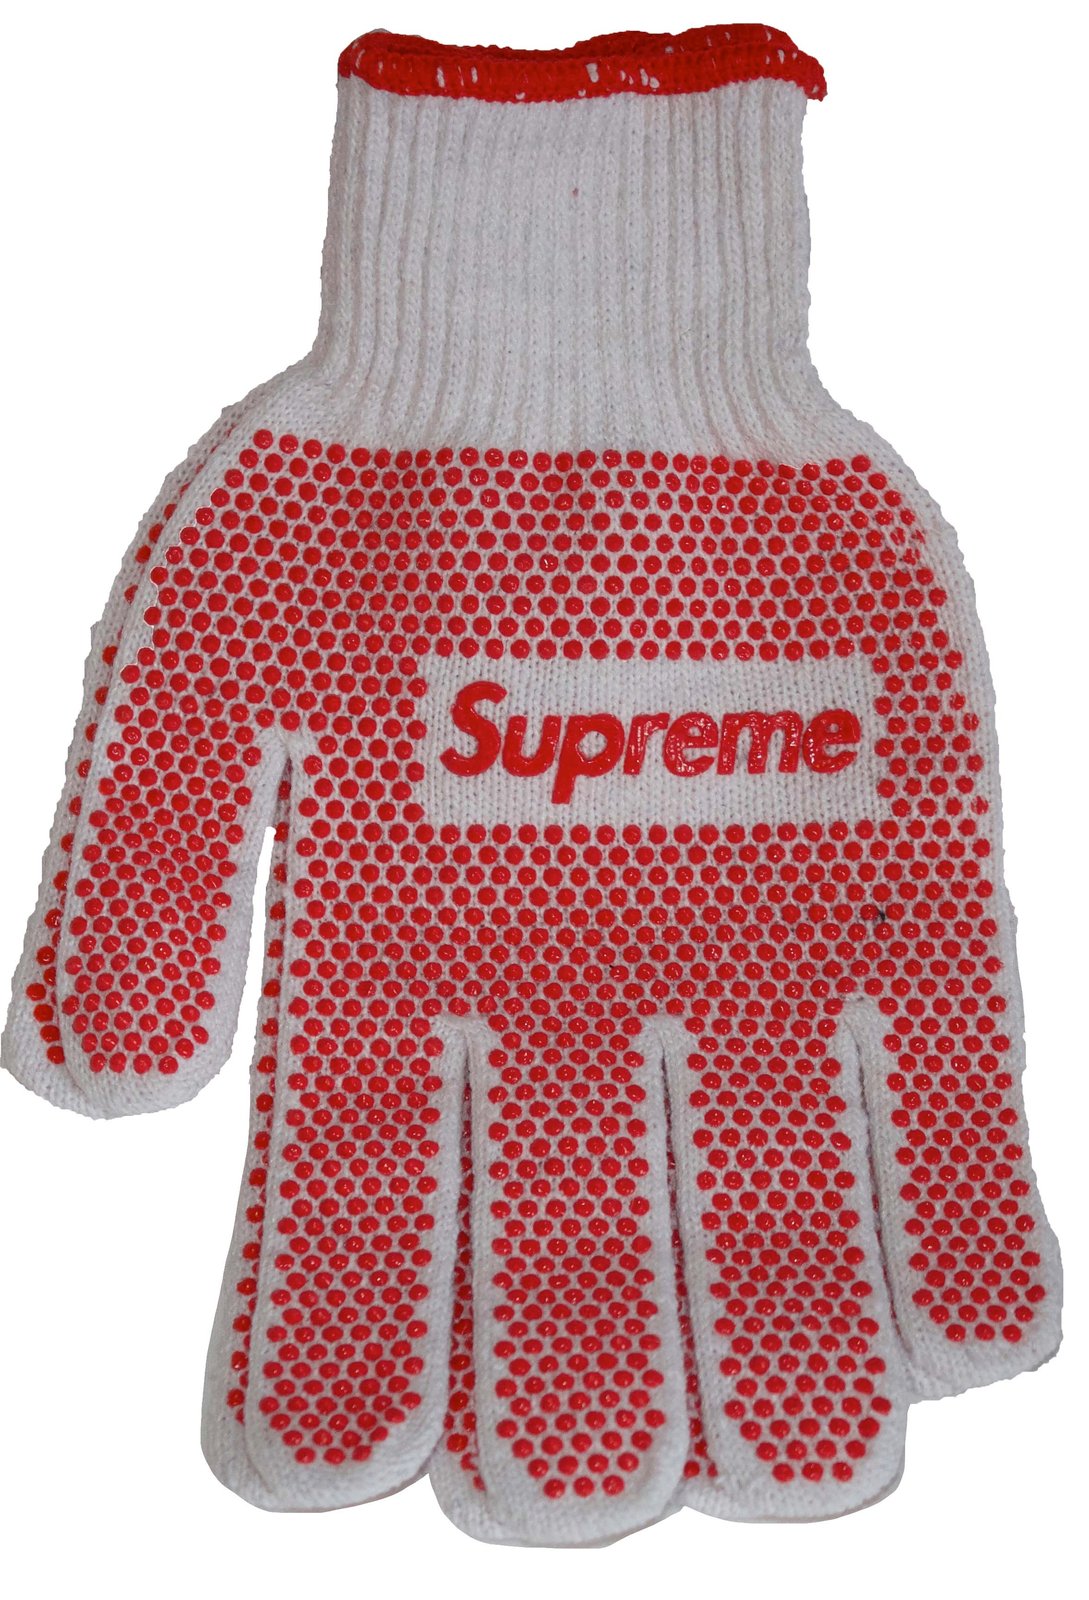 supreme gloves